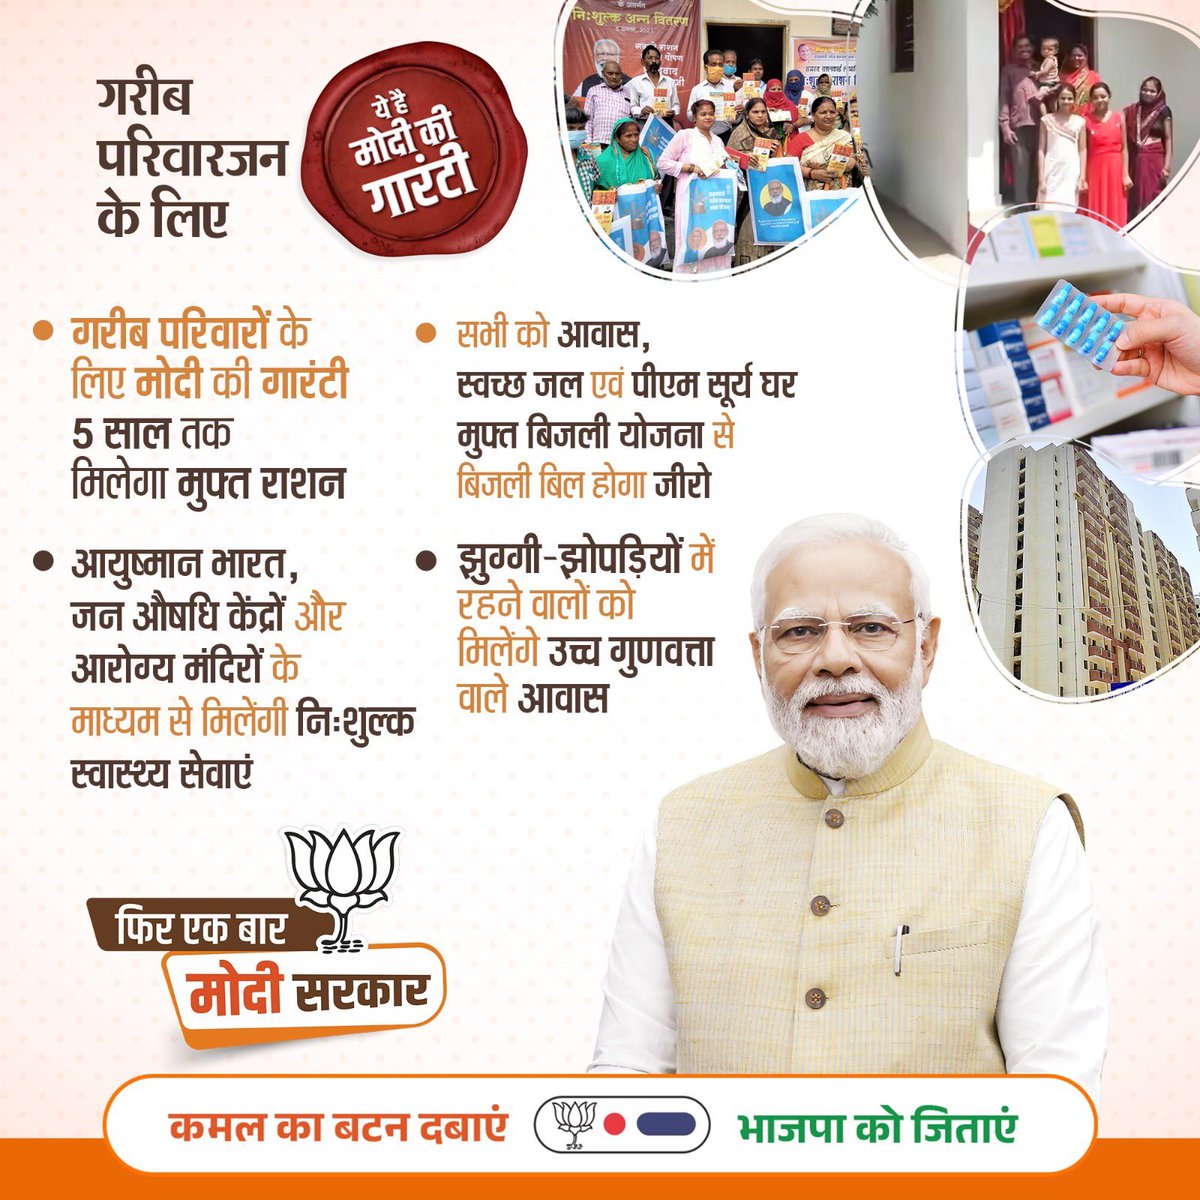 मुफ्त राशन, बेहतर स्वास्थ्य, मुफ्त बिजली, सभी को आवास। गरीब परिवारजन के लिए ये है #ModiKiGuarantee #BJPManifesto @narendramodi @BJP4India